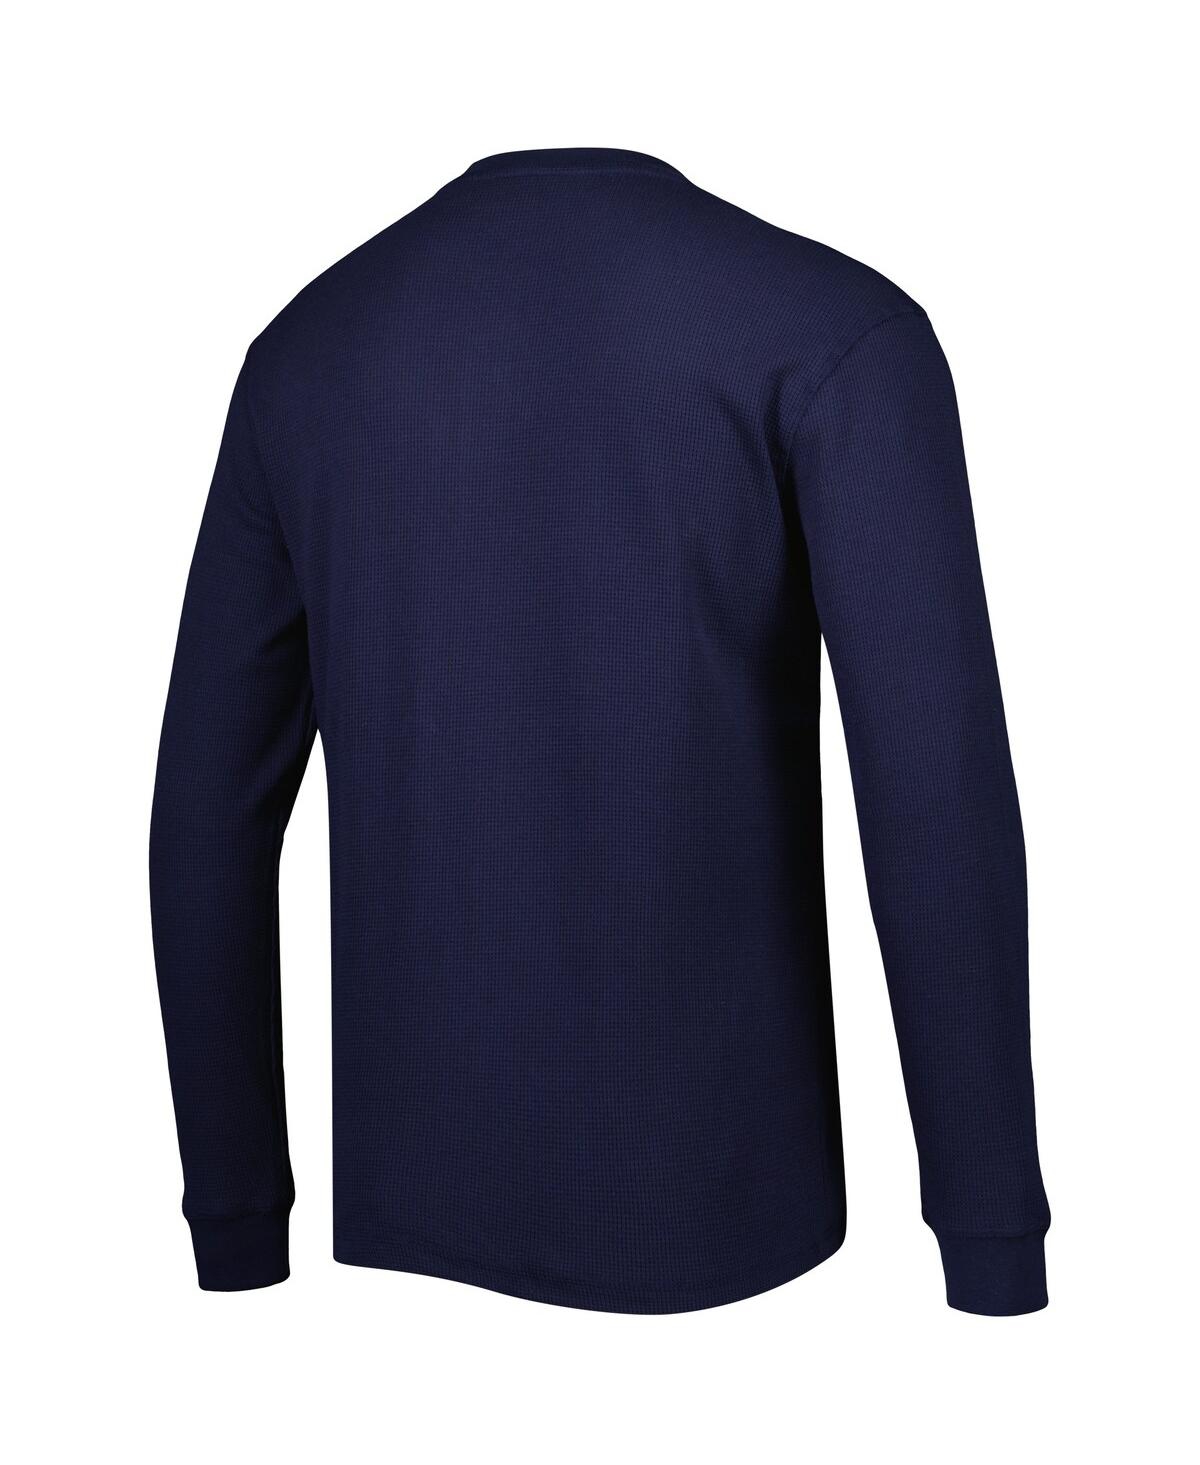 Shop Dunbrooke Men's  New York Yankees Navy Maverick Long Sleeve T-shirt